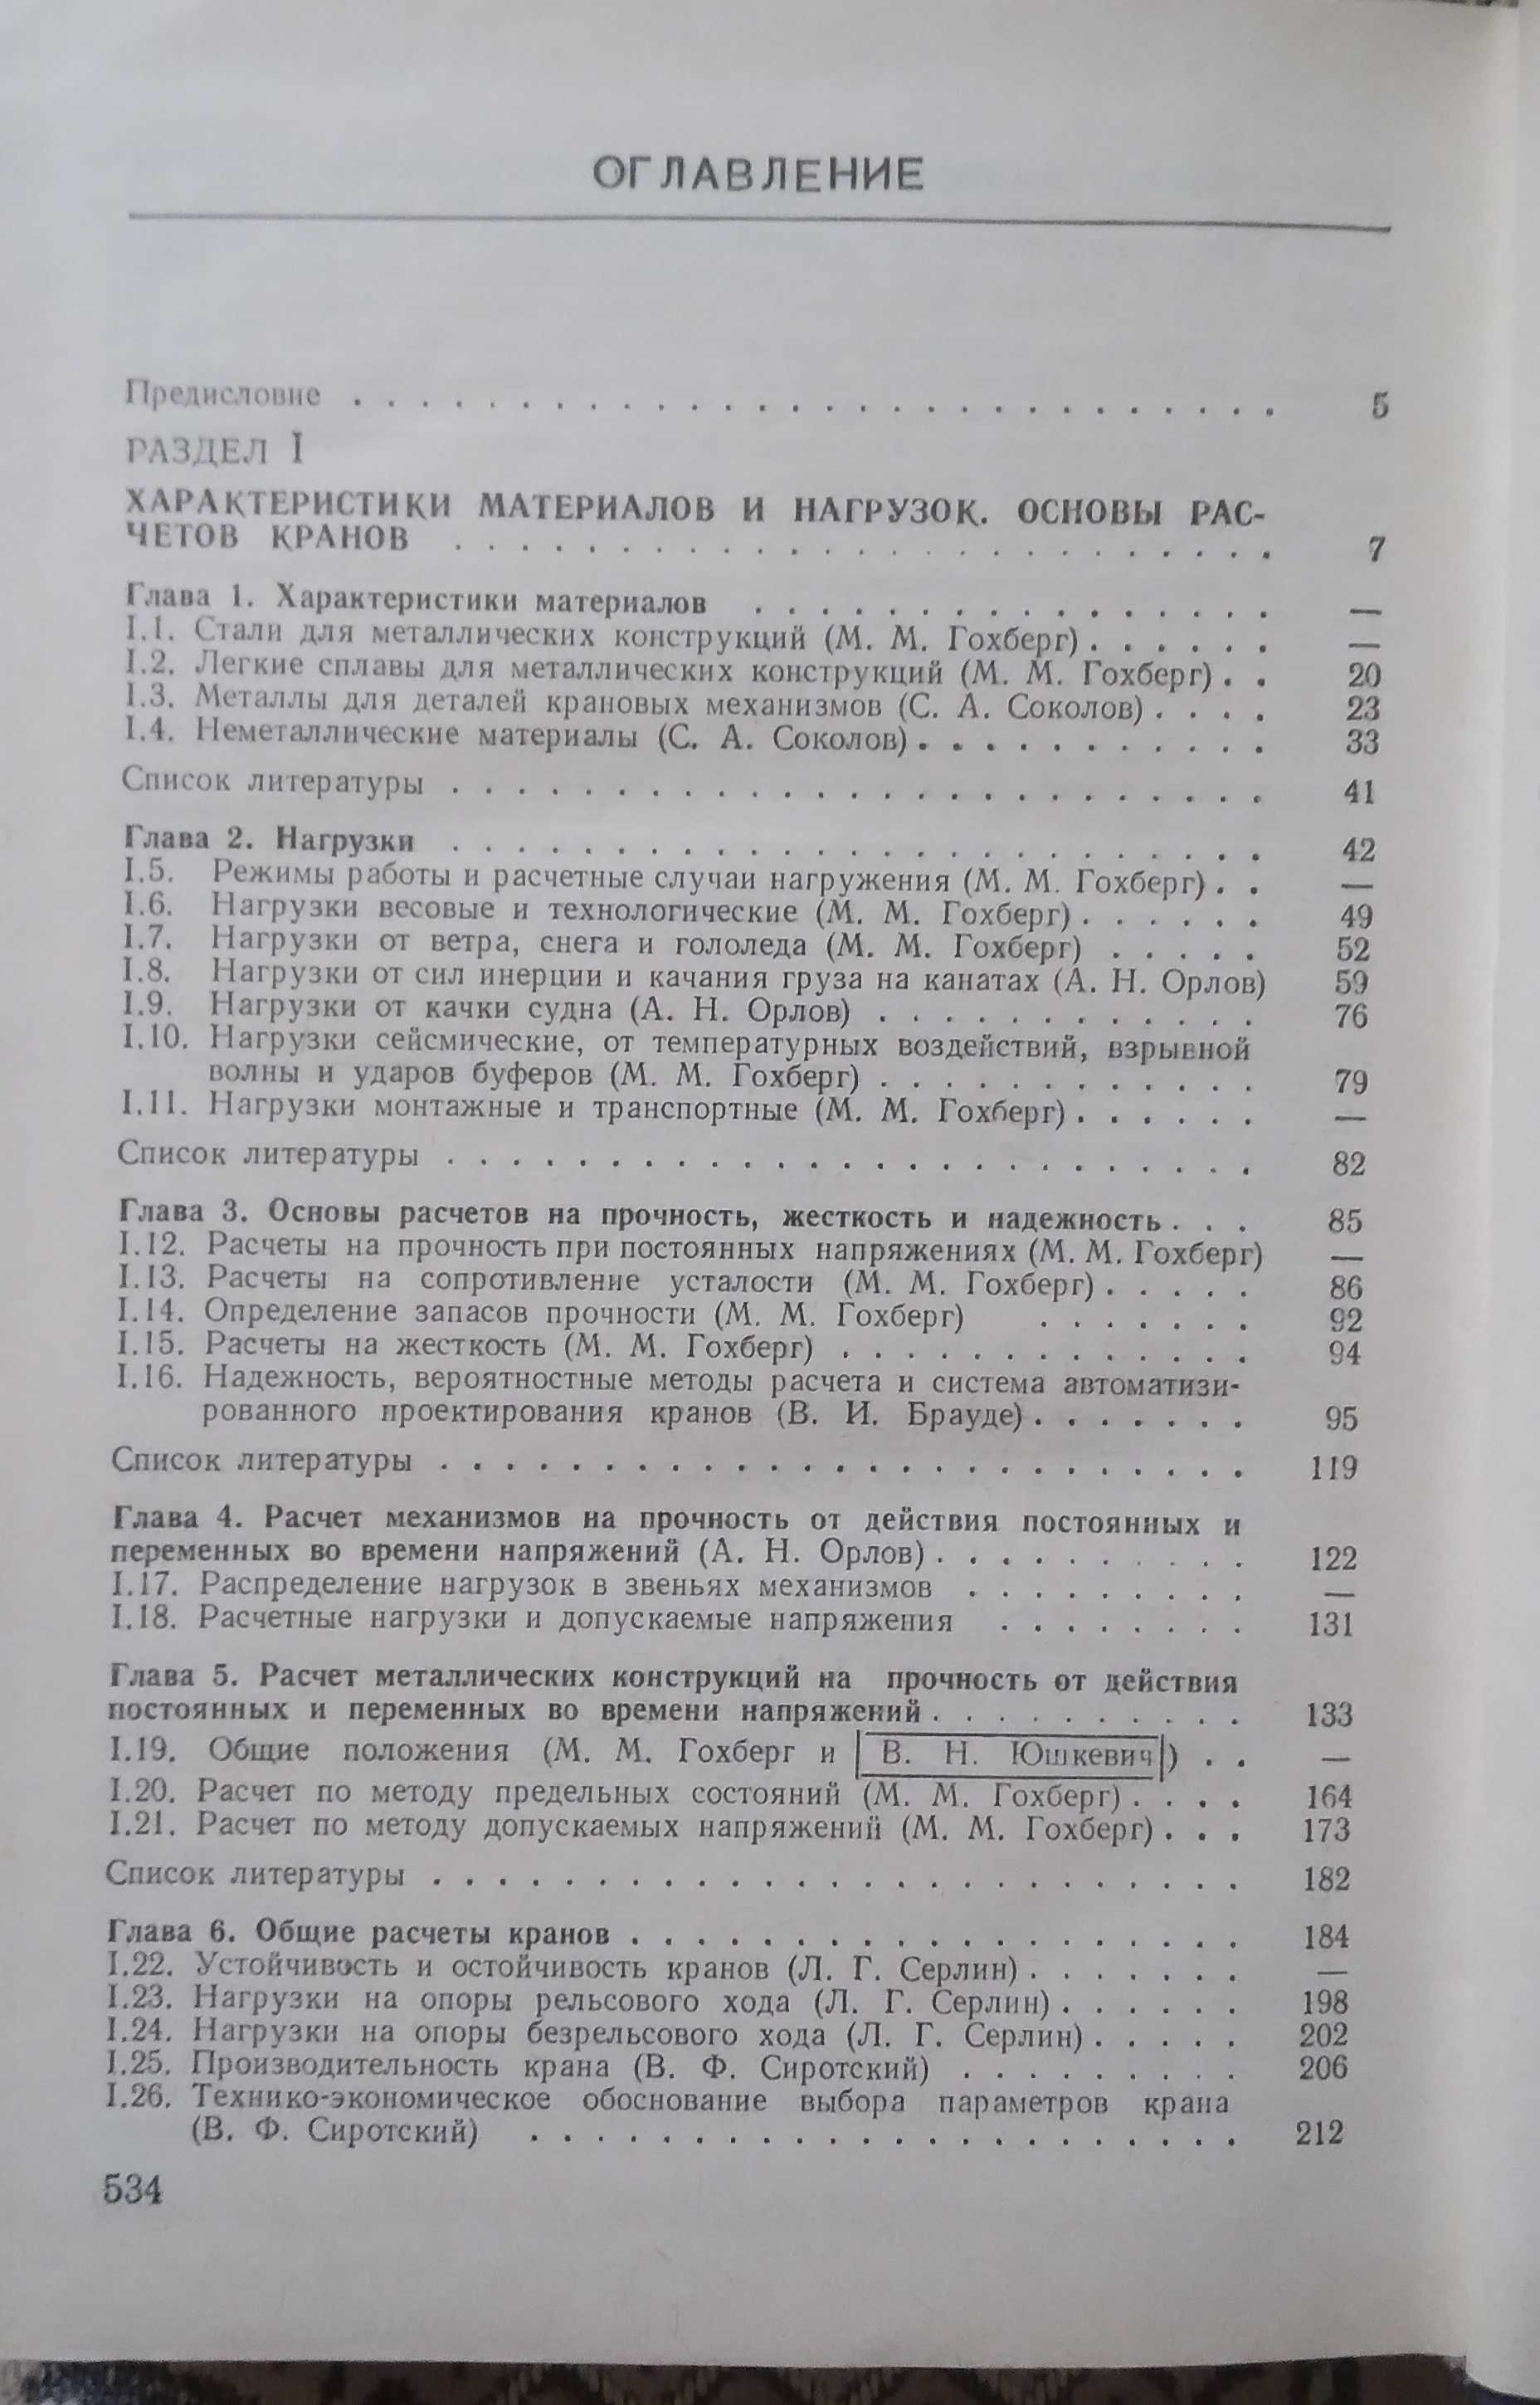 Справочник по кранам в 2-х томах Гохберг М.М.